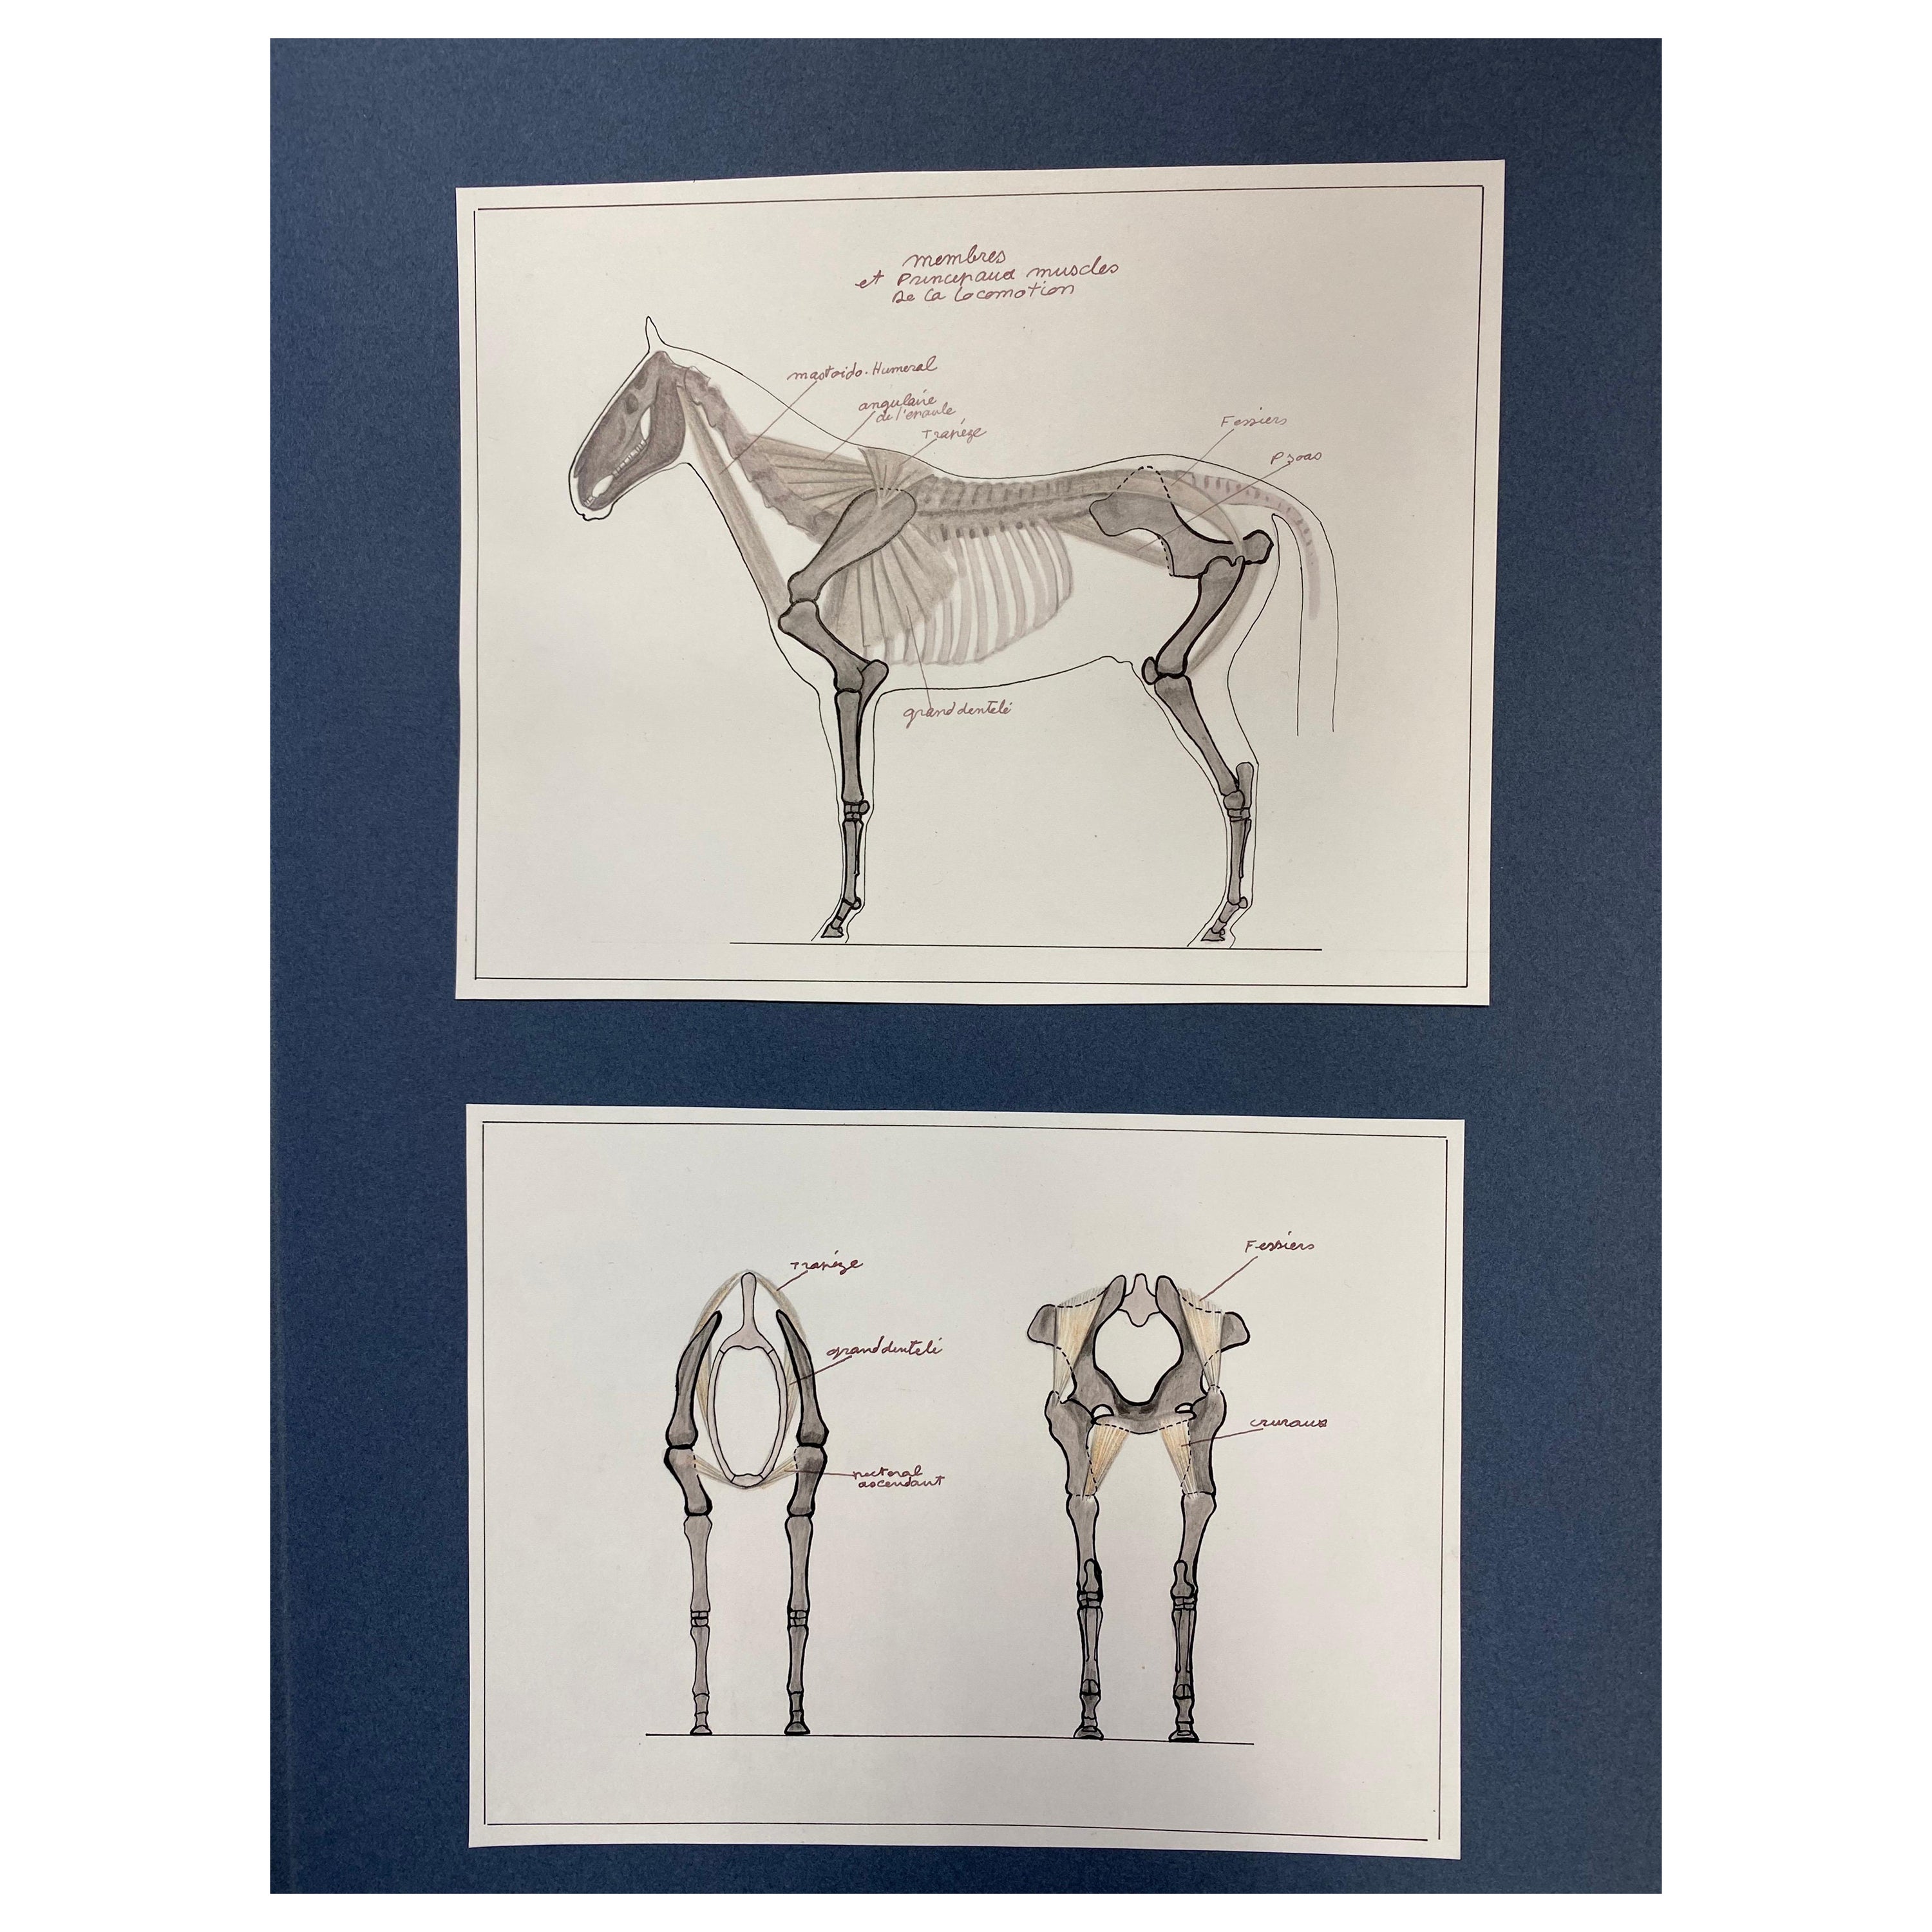 Anatomy Drawings of a Horse, Original French Artwork Equestrian Anatomy Study